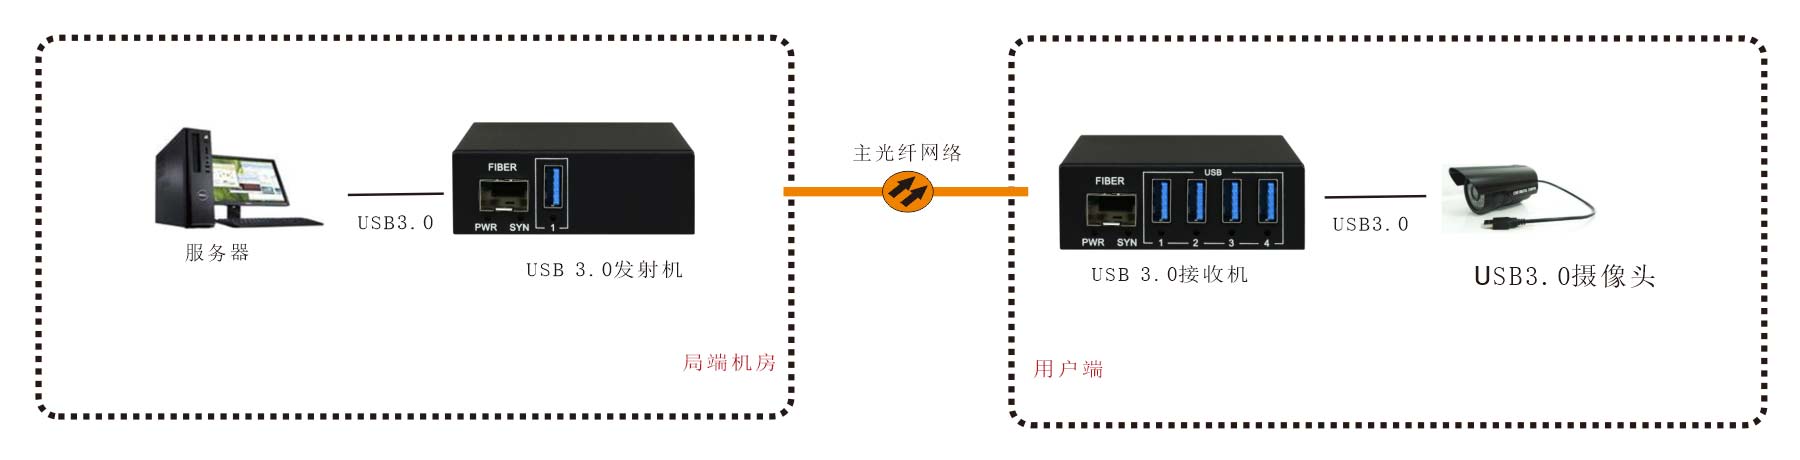 USB3.0 光端机 应用方案图